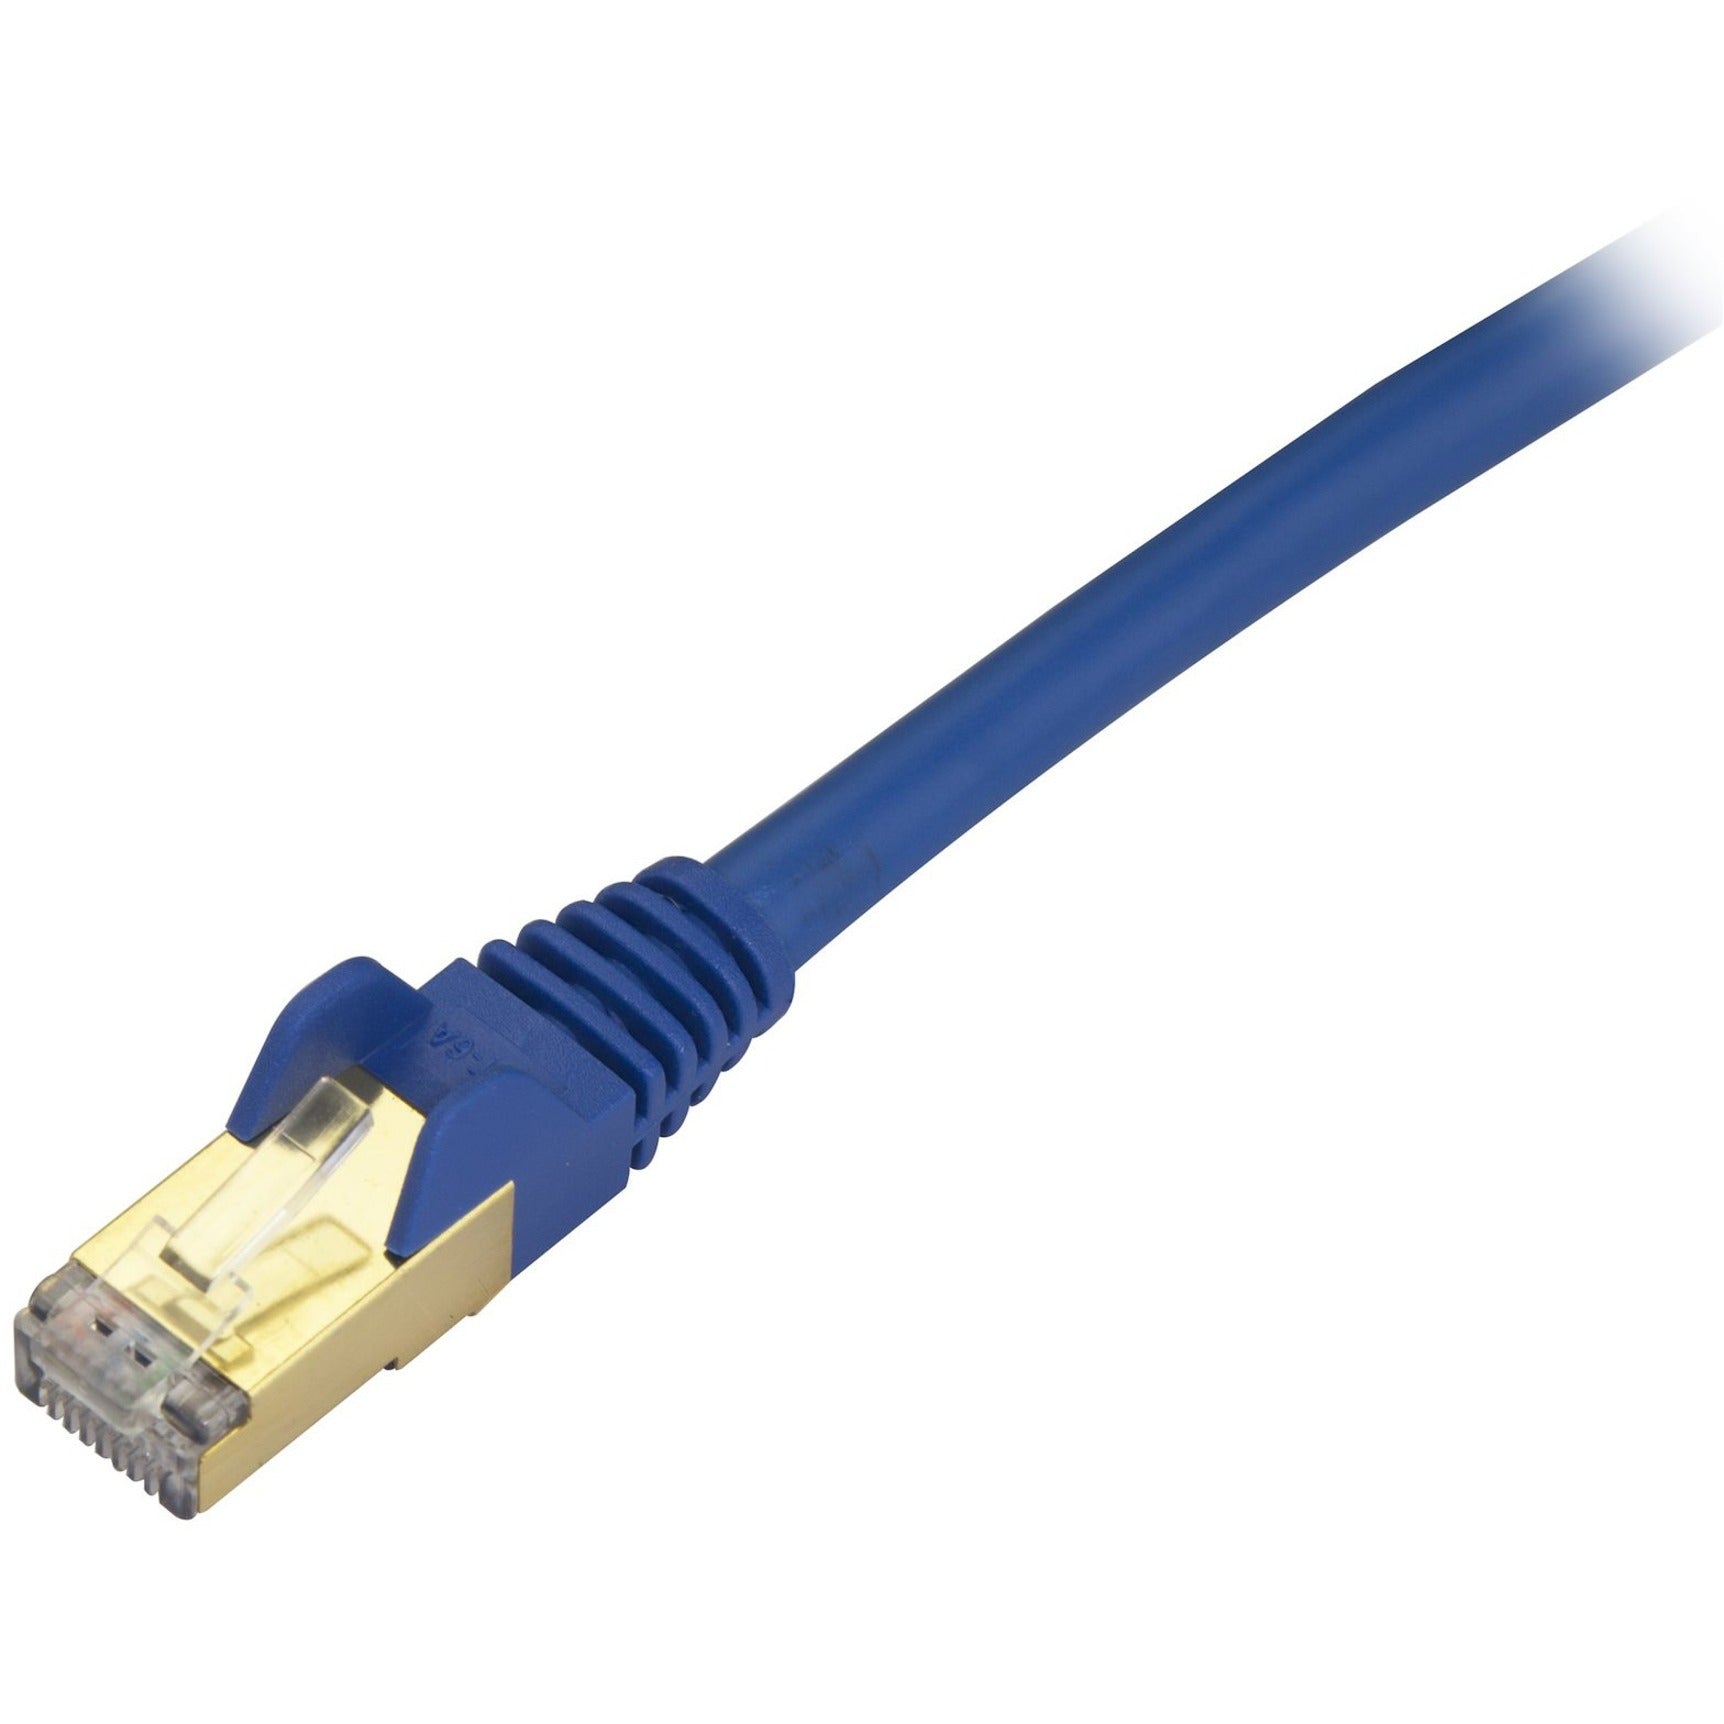 StarTech.com C6ASPAT12BL Cat6a Ethernet Patch Cable - Shielded (STP) - 12 ft. Blue Snagless RJ45 Ethernet Cord